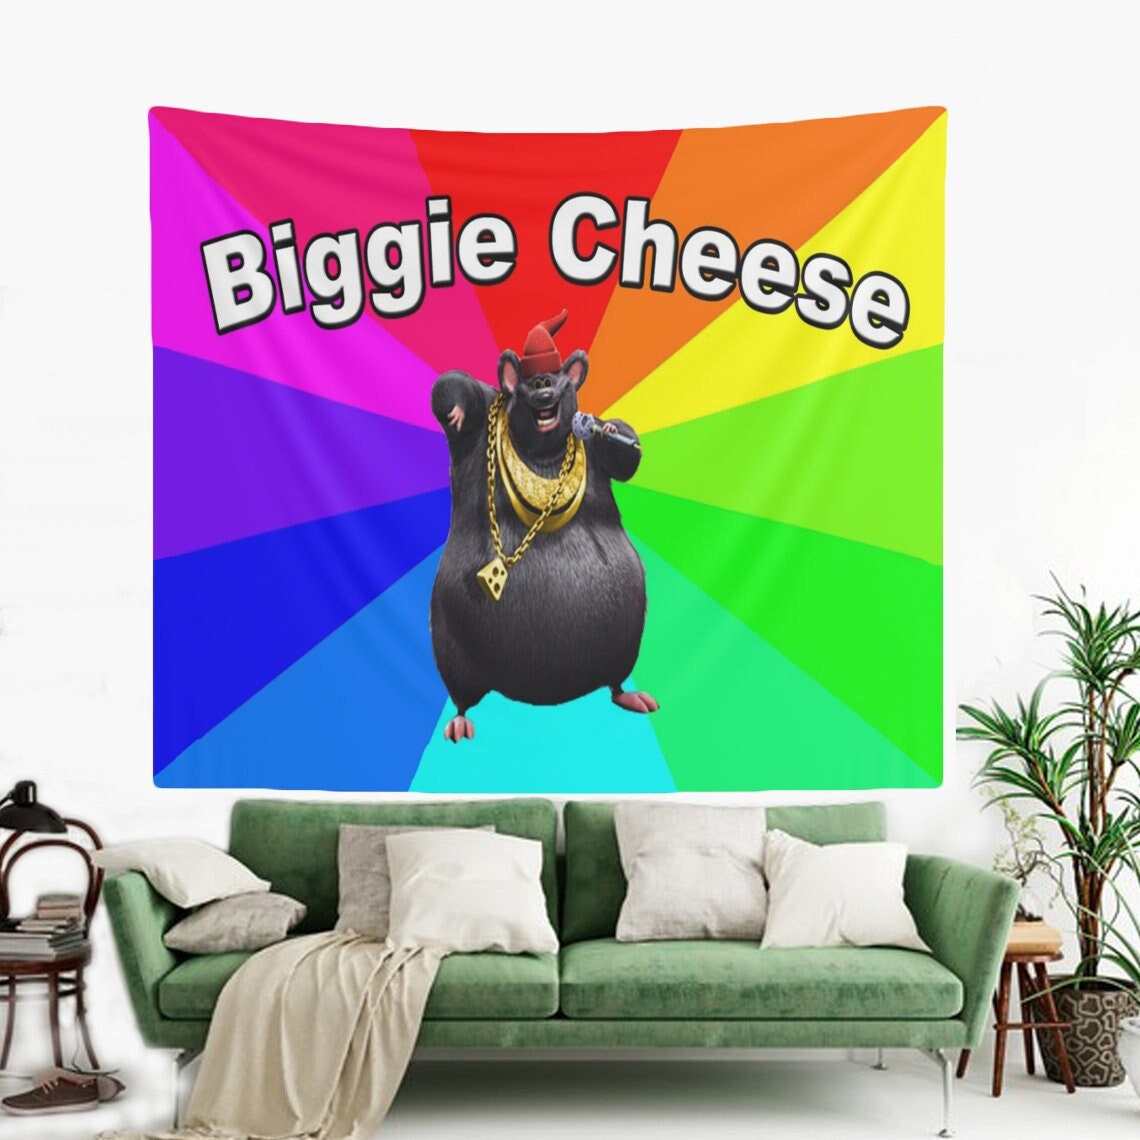 sup guys, it's biggie cheese : r/memes